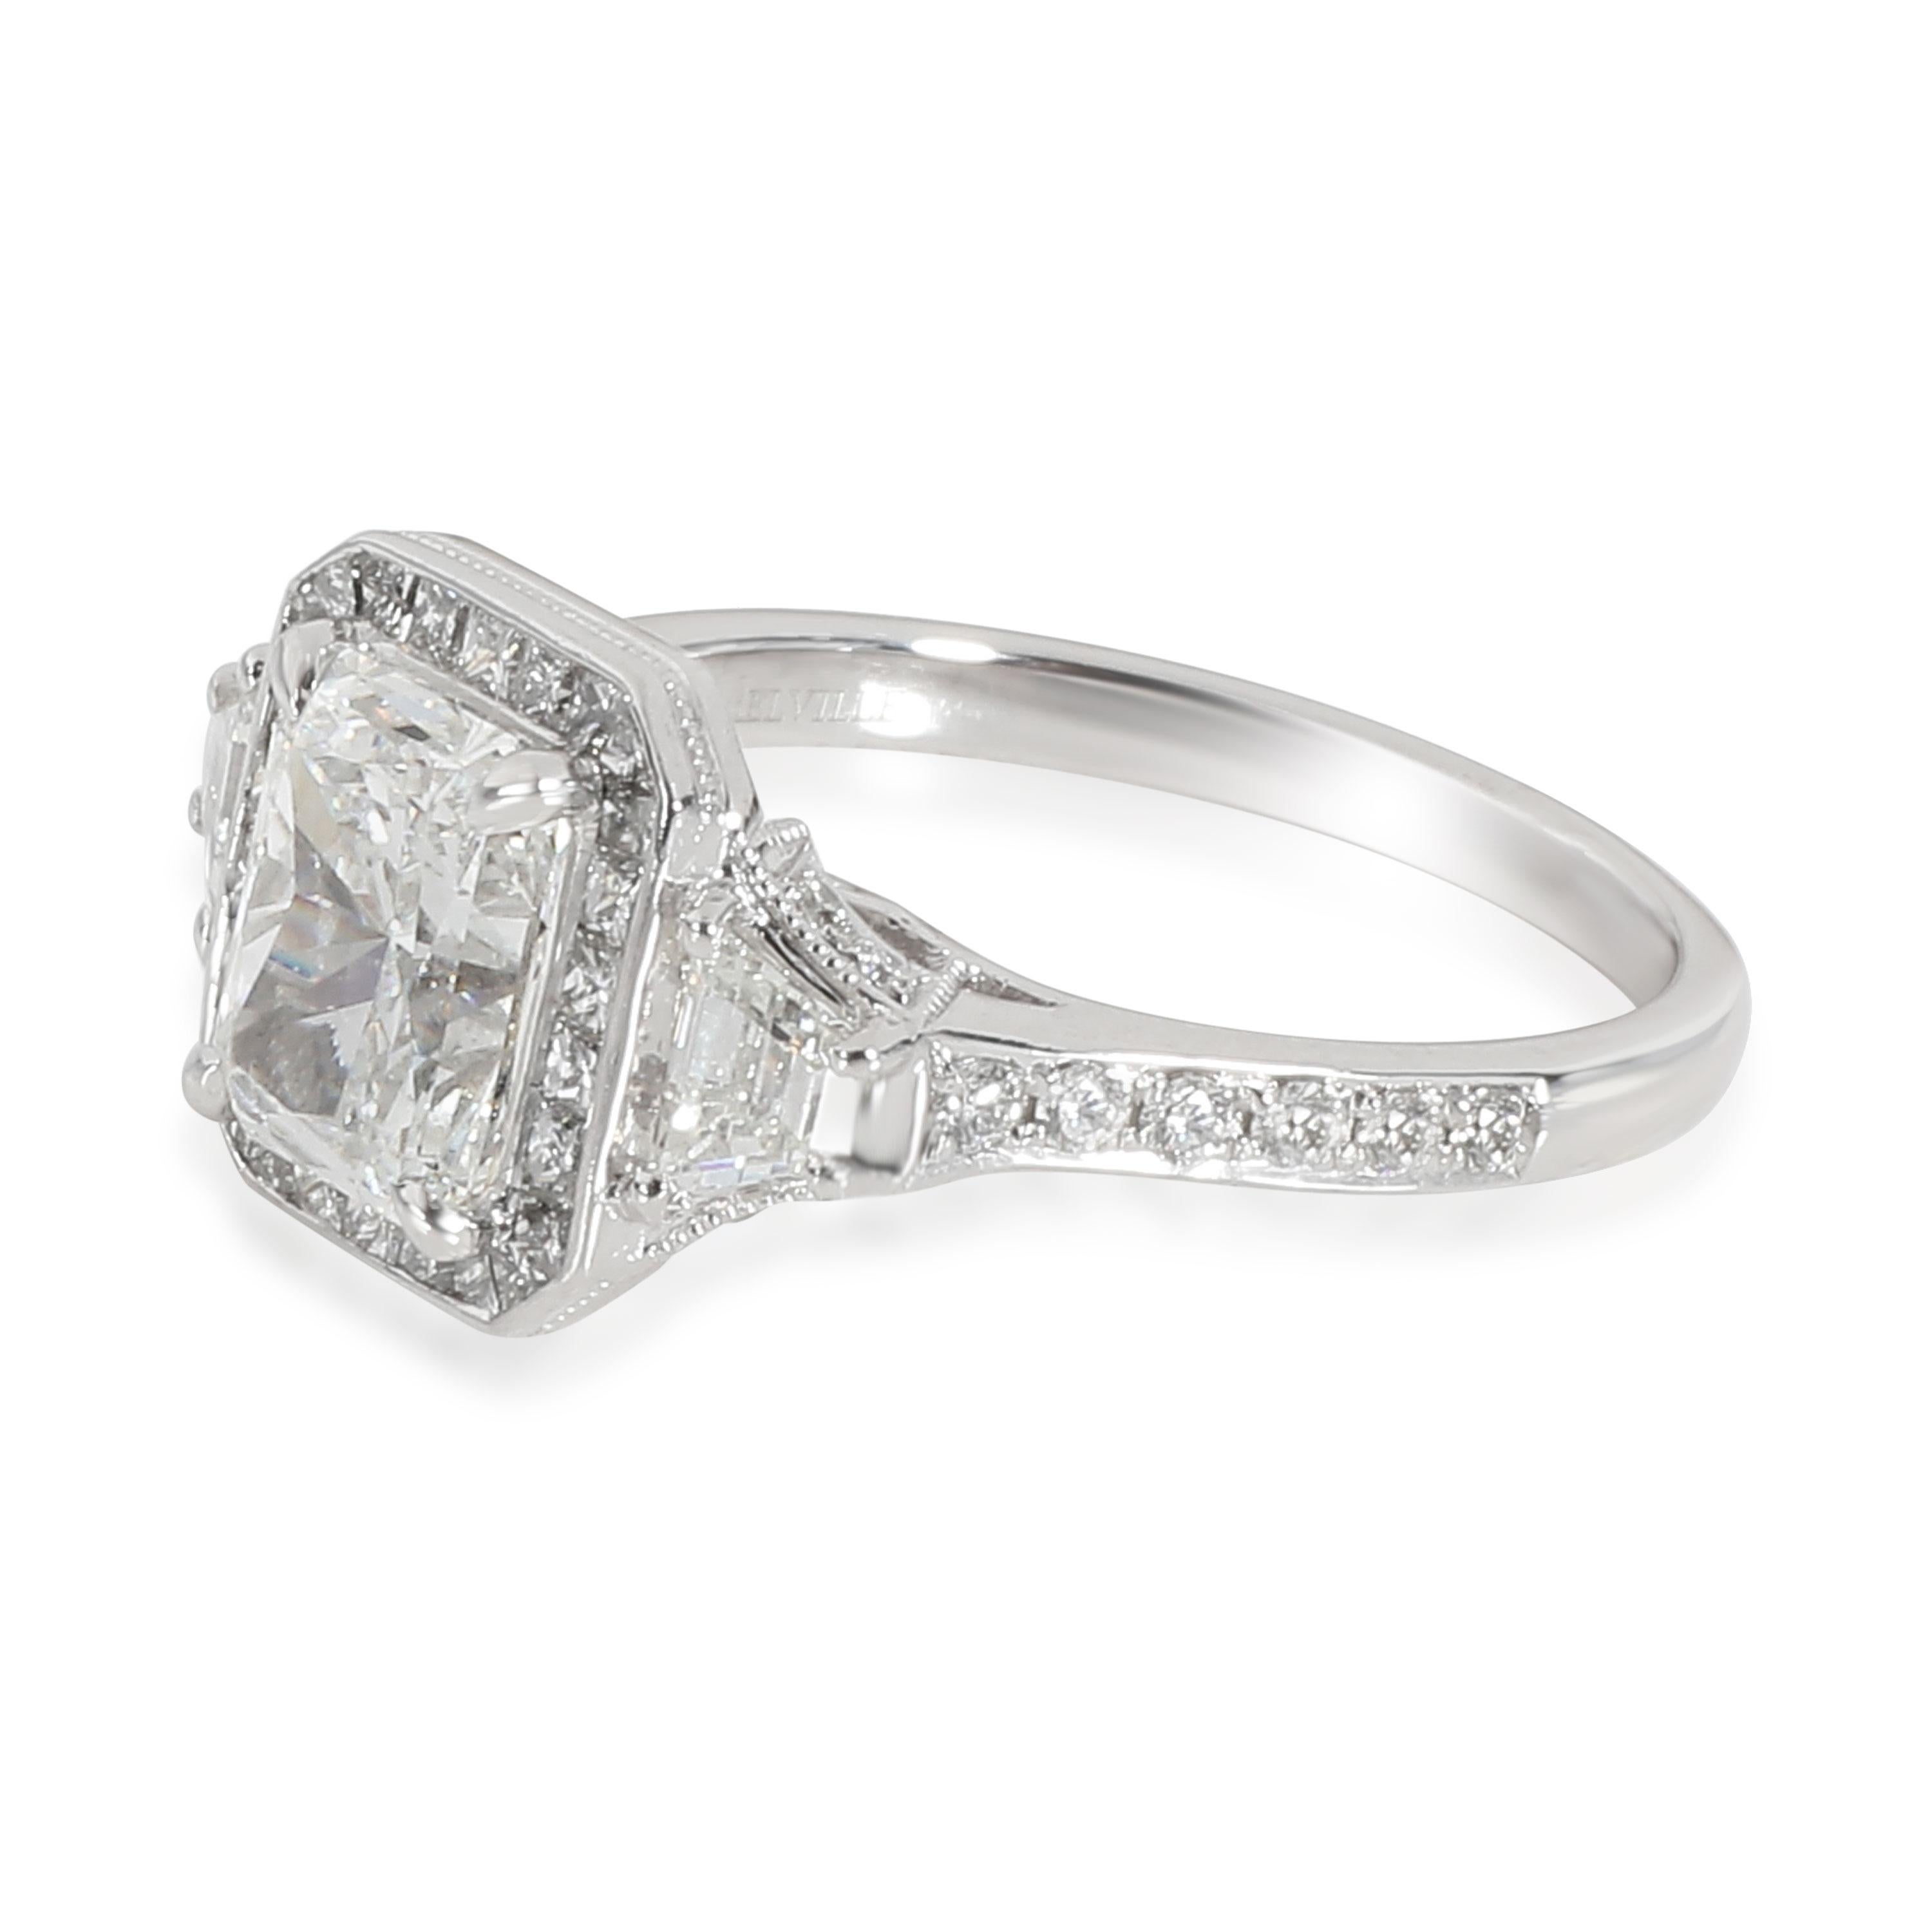 Radiant Cut Radiant Halo Diamond Engagement Ring in Platinum GIA Certified F VVS2 2.81 Carat